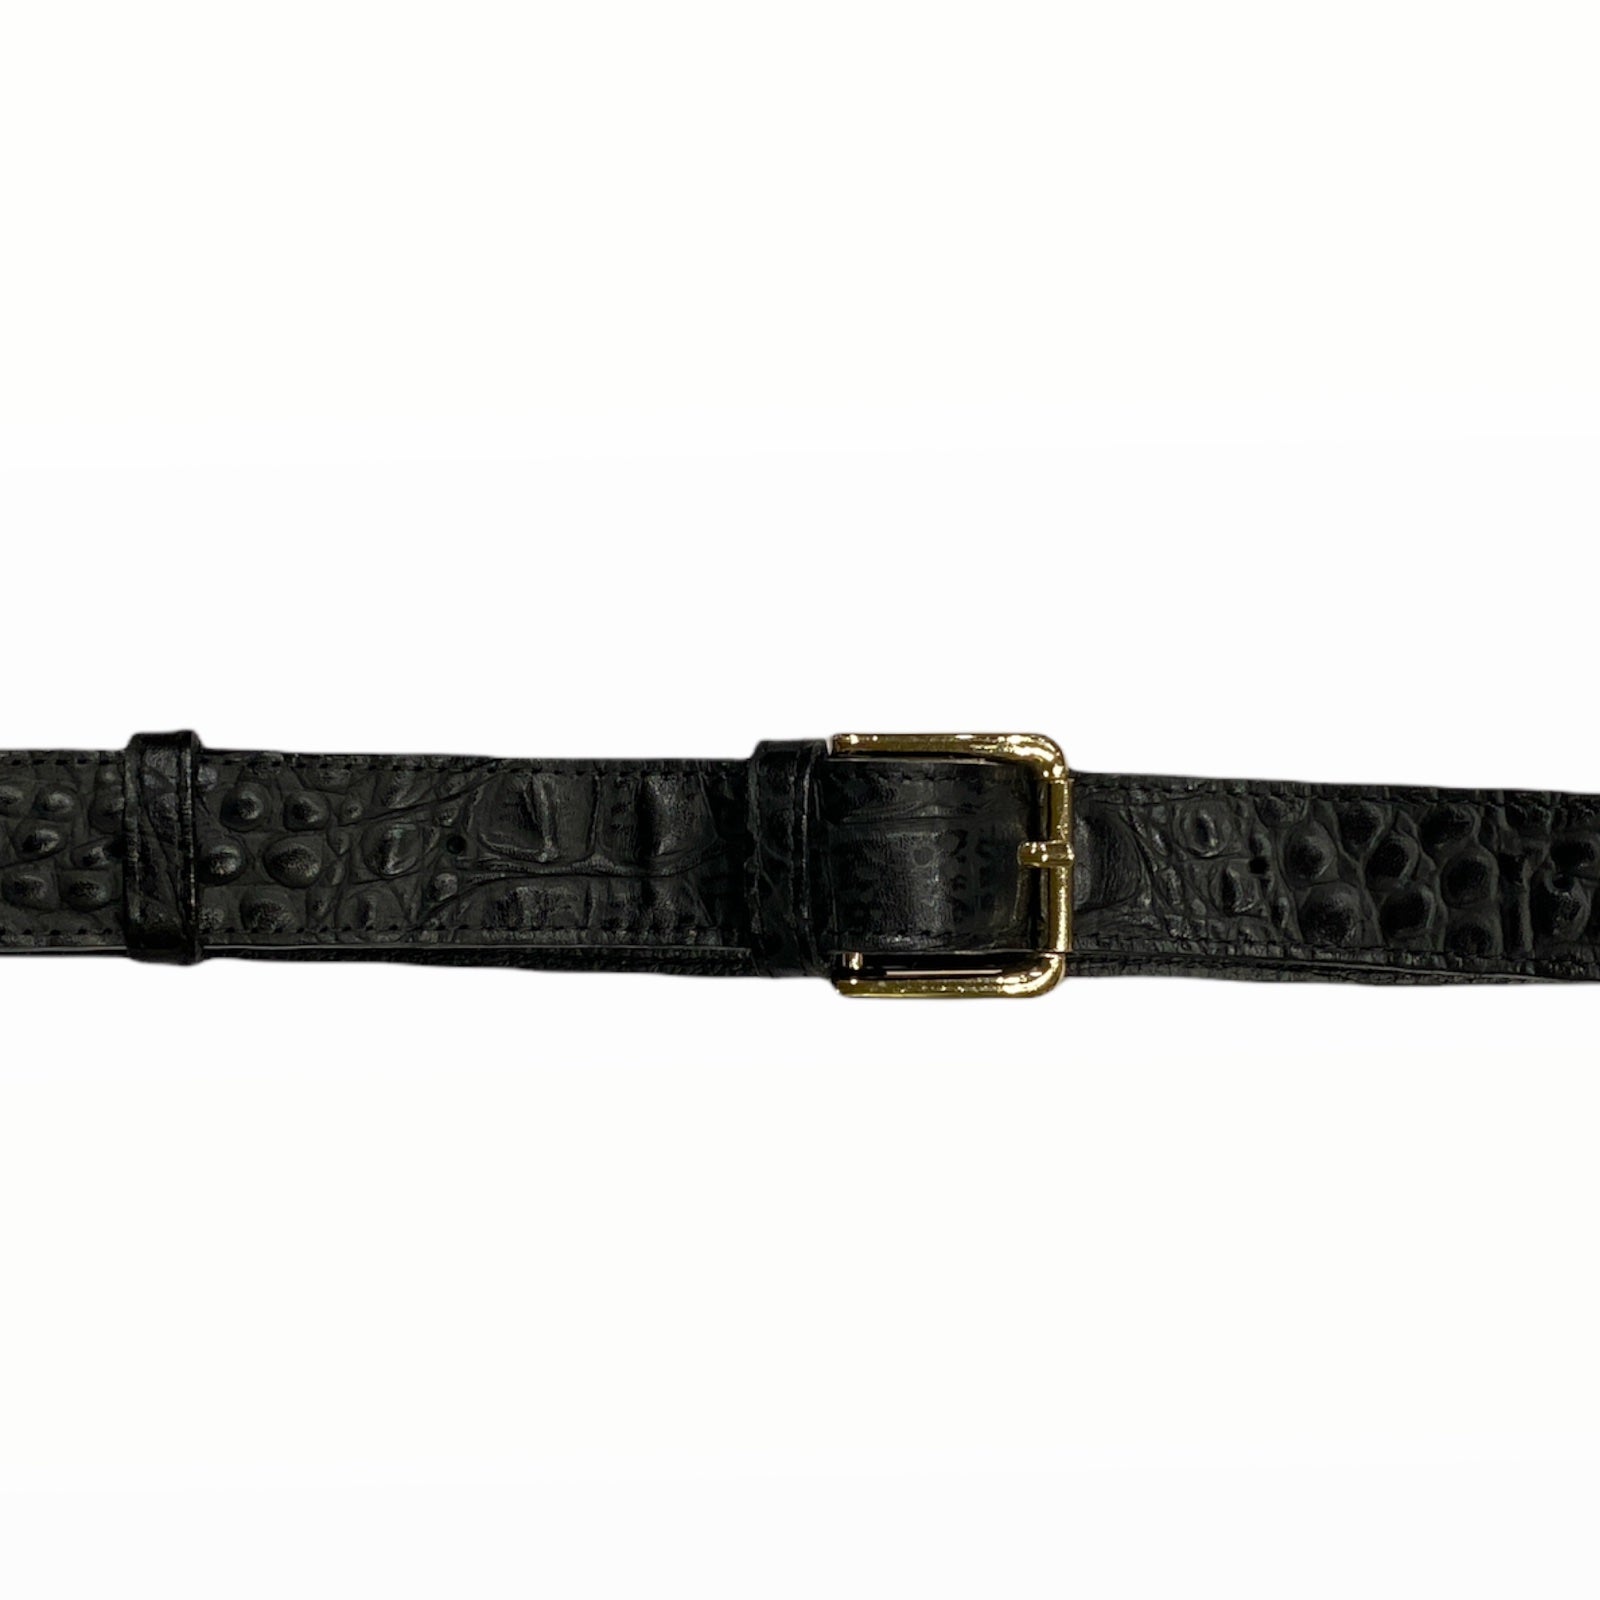 Carouzou black leather belt with gold metals